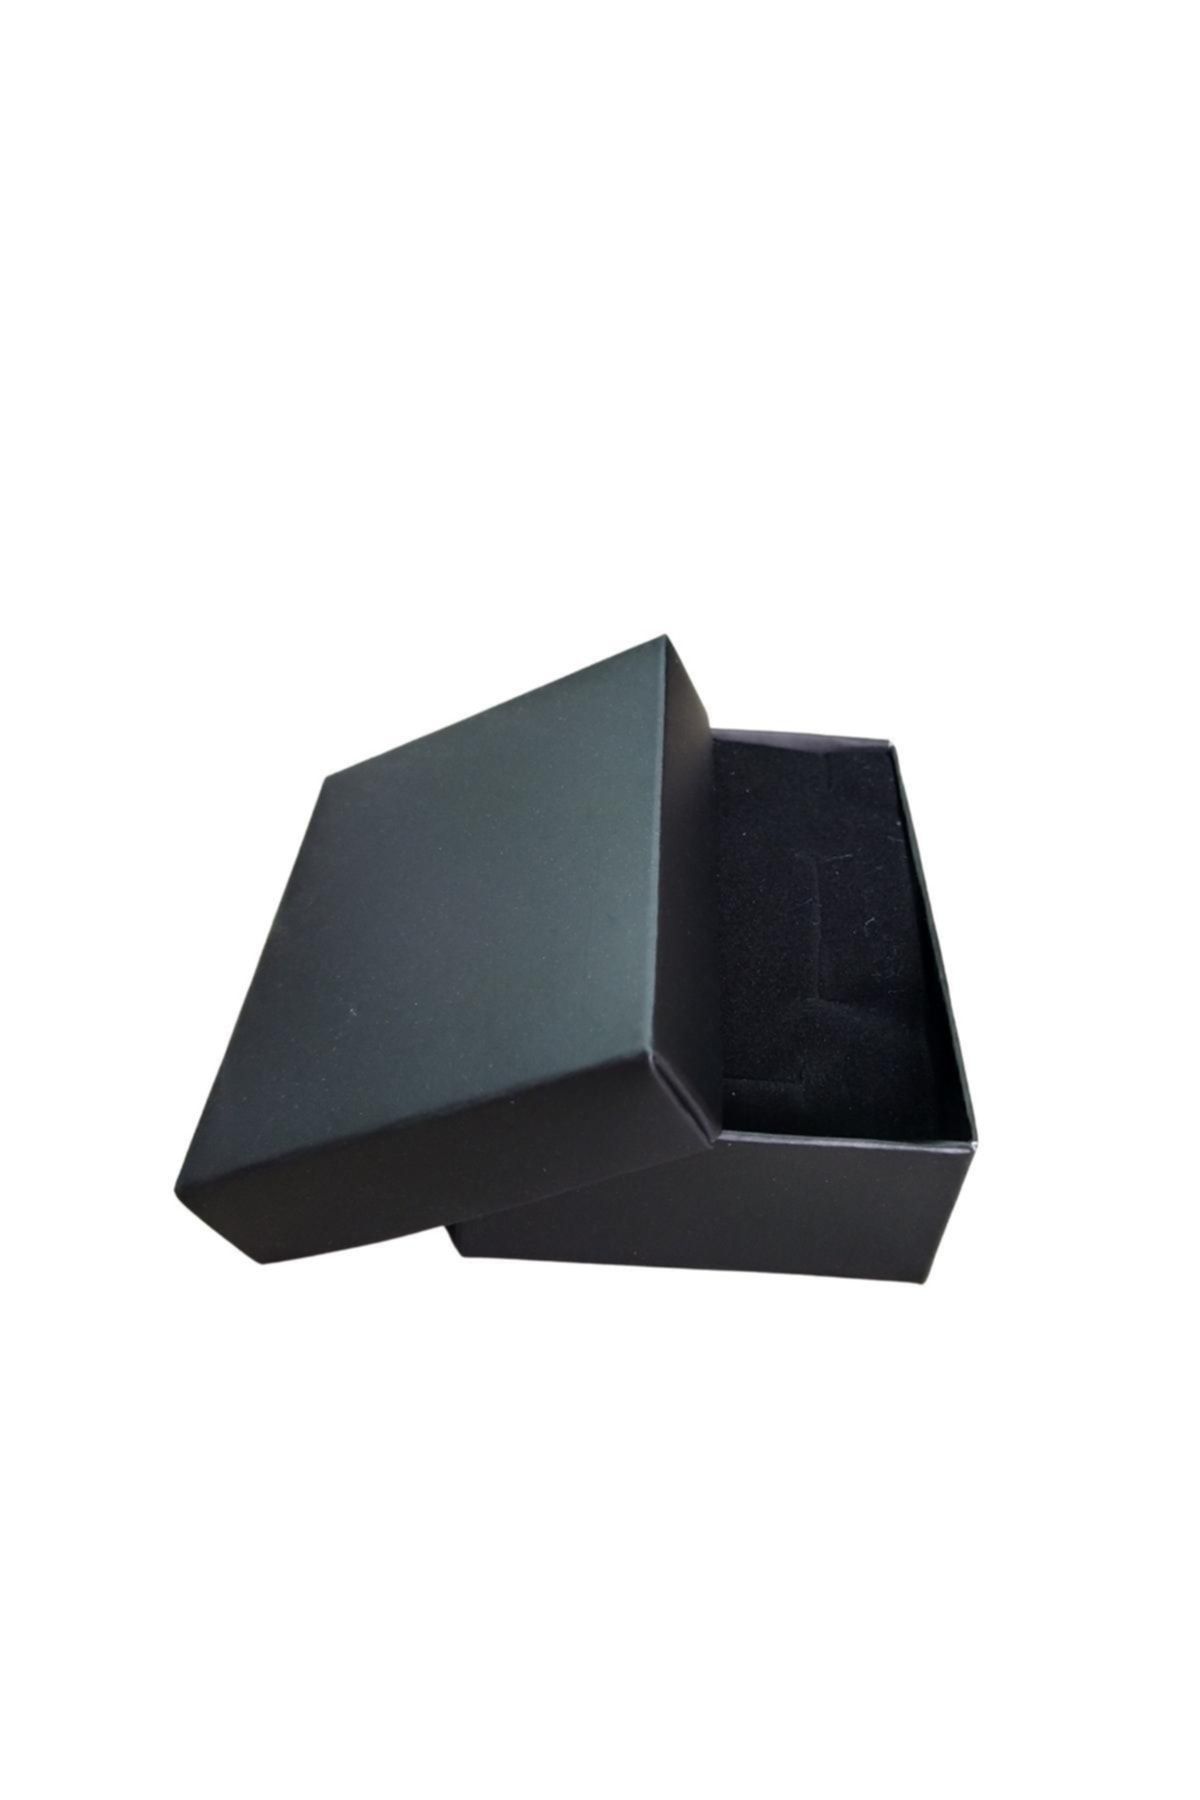 ÖZER KUTU Siyah Karton Kolye & Mini Set Kutusu 24 Lü Paket(İÇİ SÜNGERLİ)